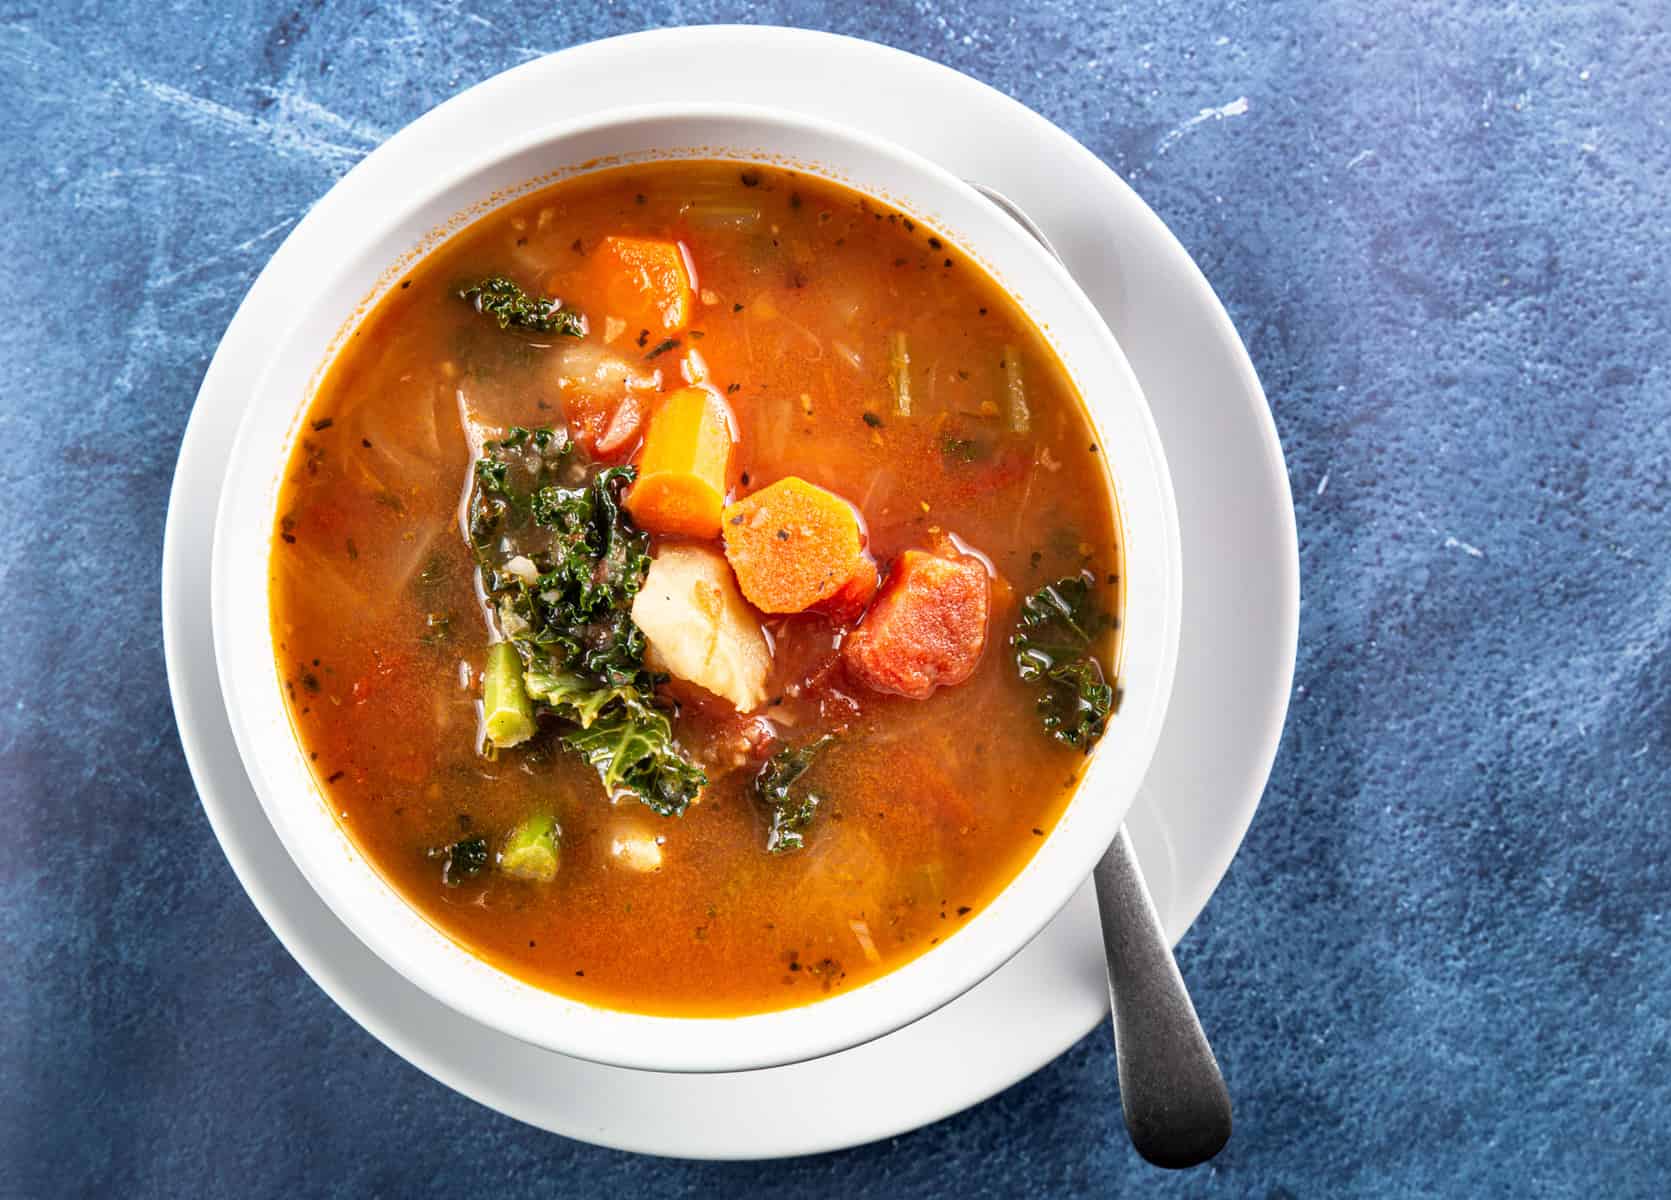 https://www.pressurecookrecipes.com/wp-content/uploads/2021/03/instant-pot-vegetable-soup.jpg